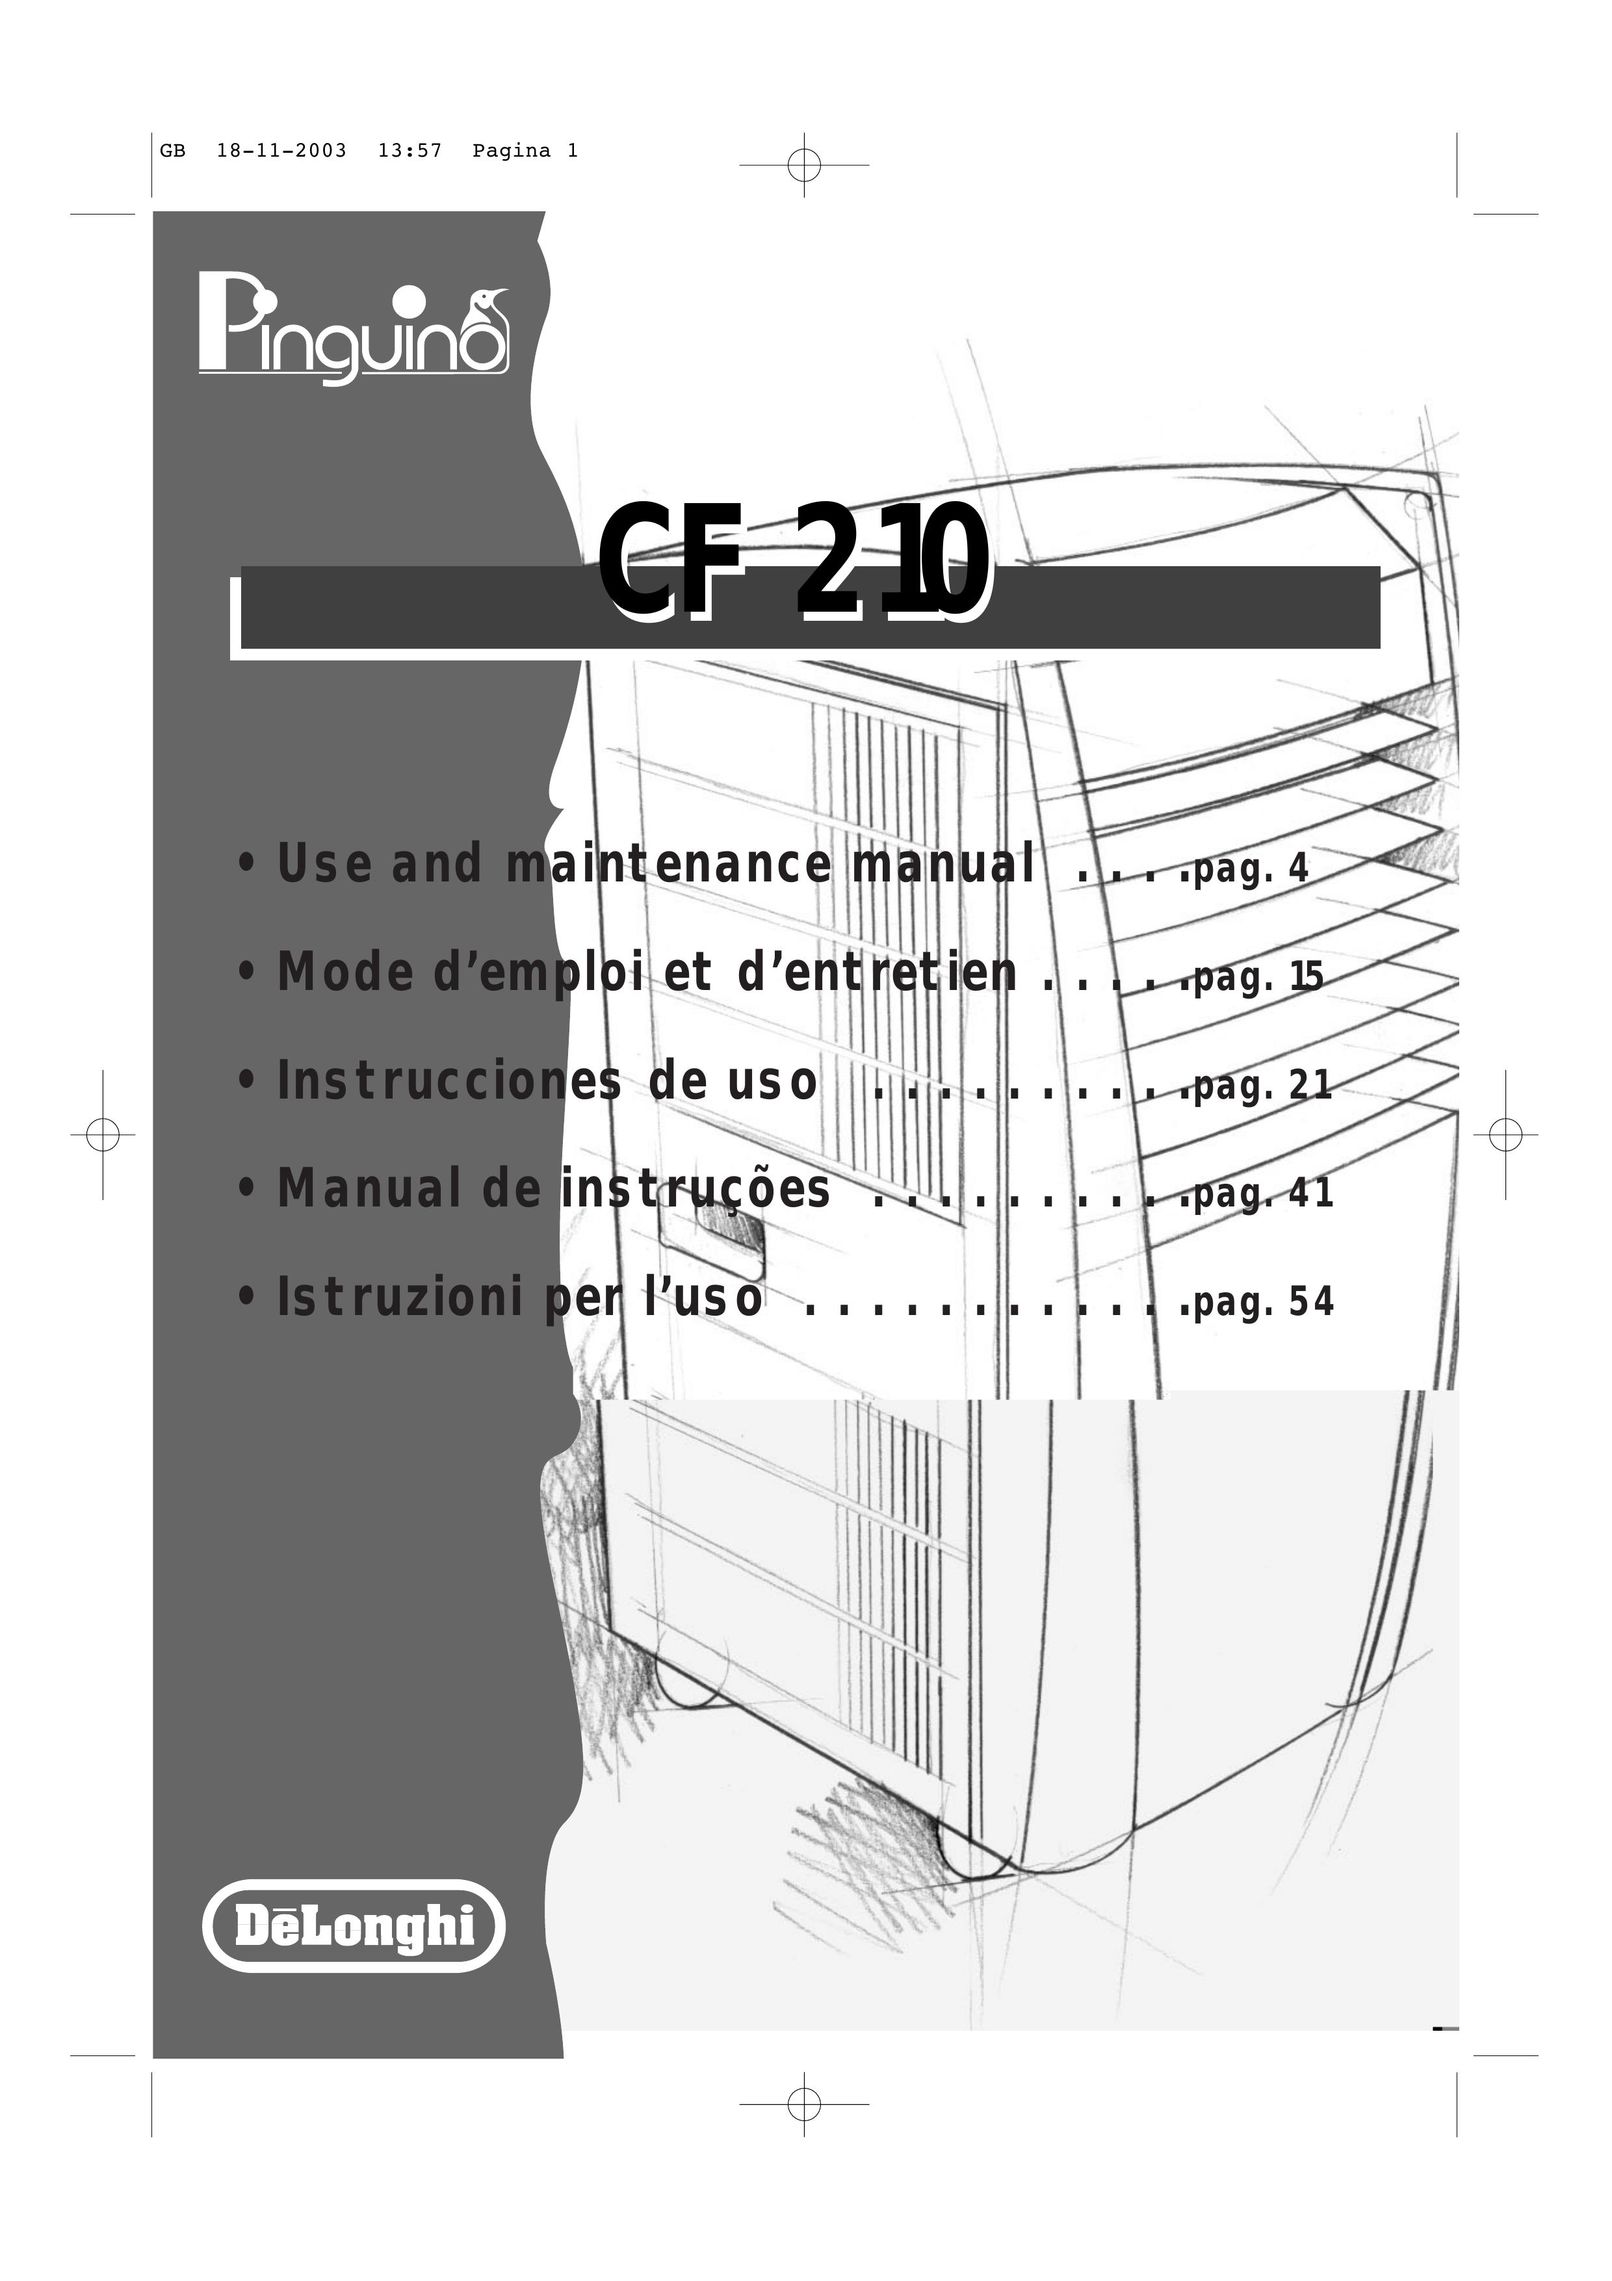 DeLonghi CF 210 Air Conditioner User Manual